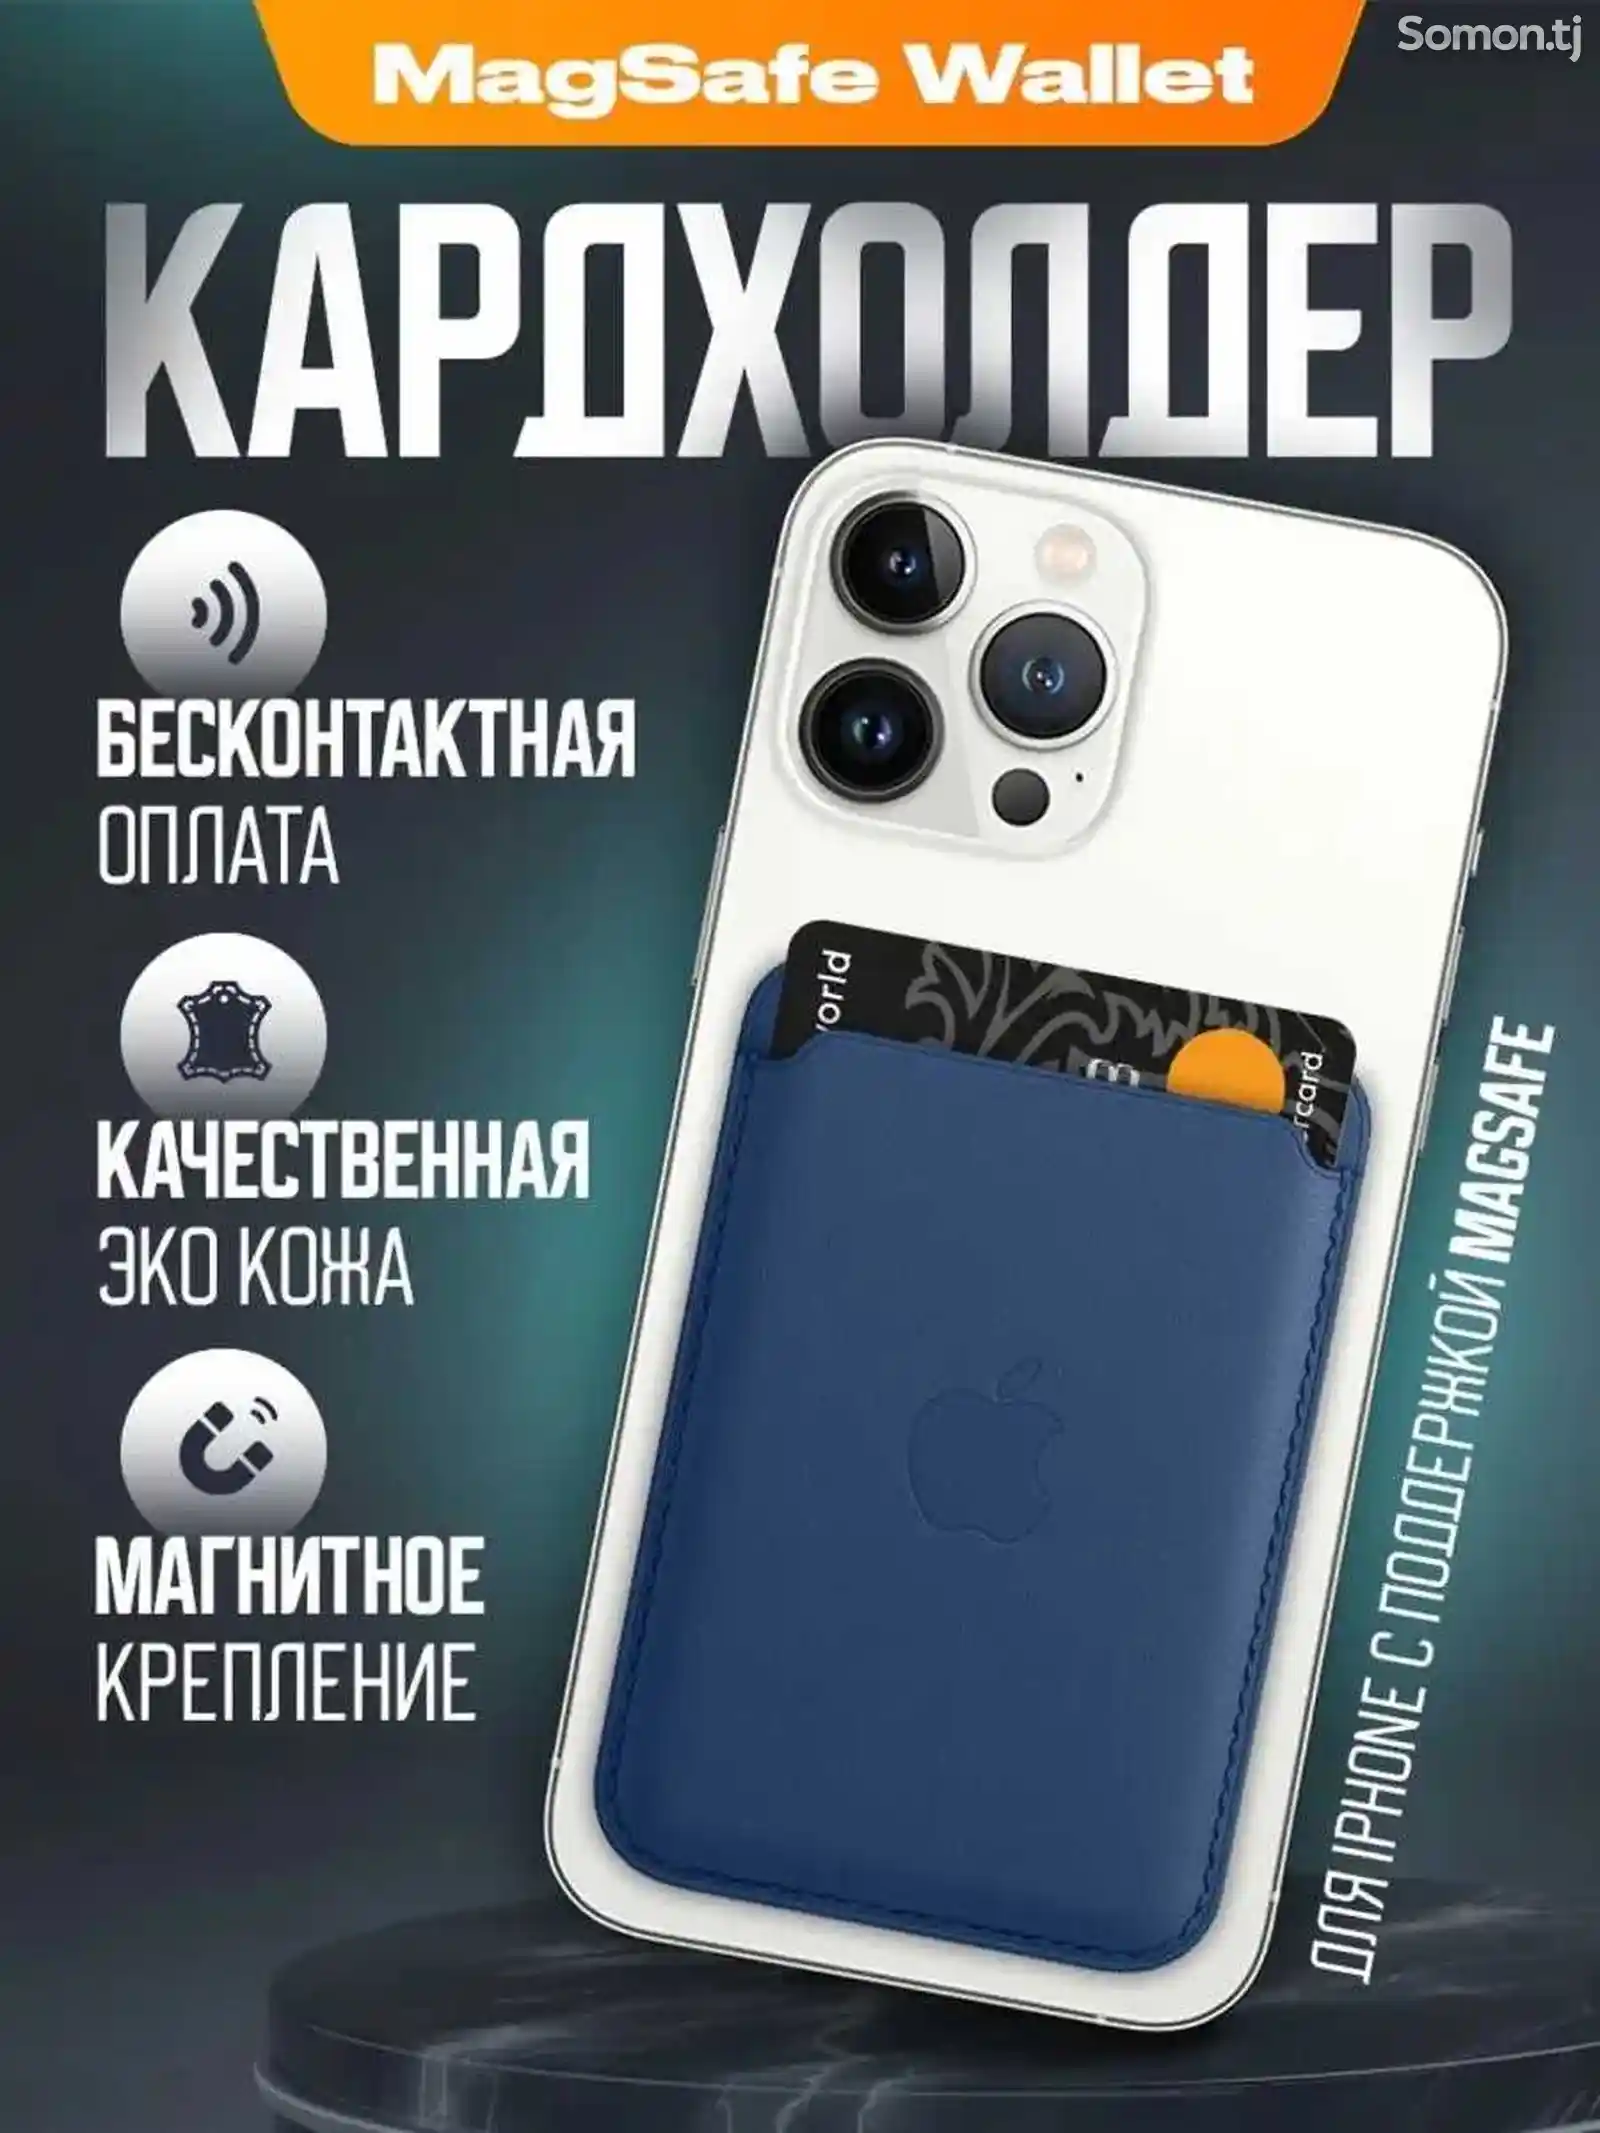 Картхолдер на iPhone Wallet MagSafe на заказ-1